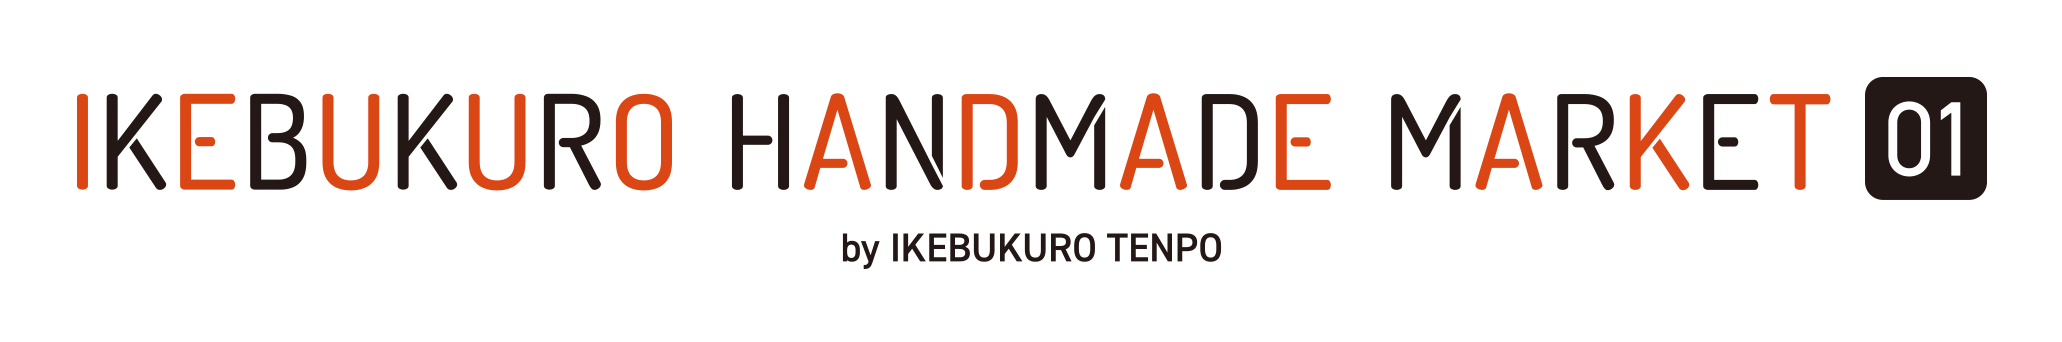 IKEBUKURO HANDMADE MARKET 01 by IKEBUKURO TENPO